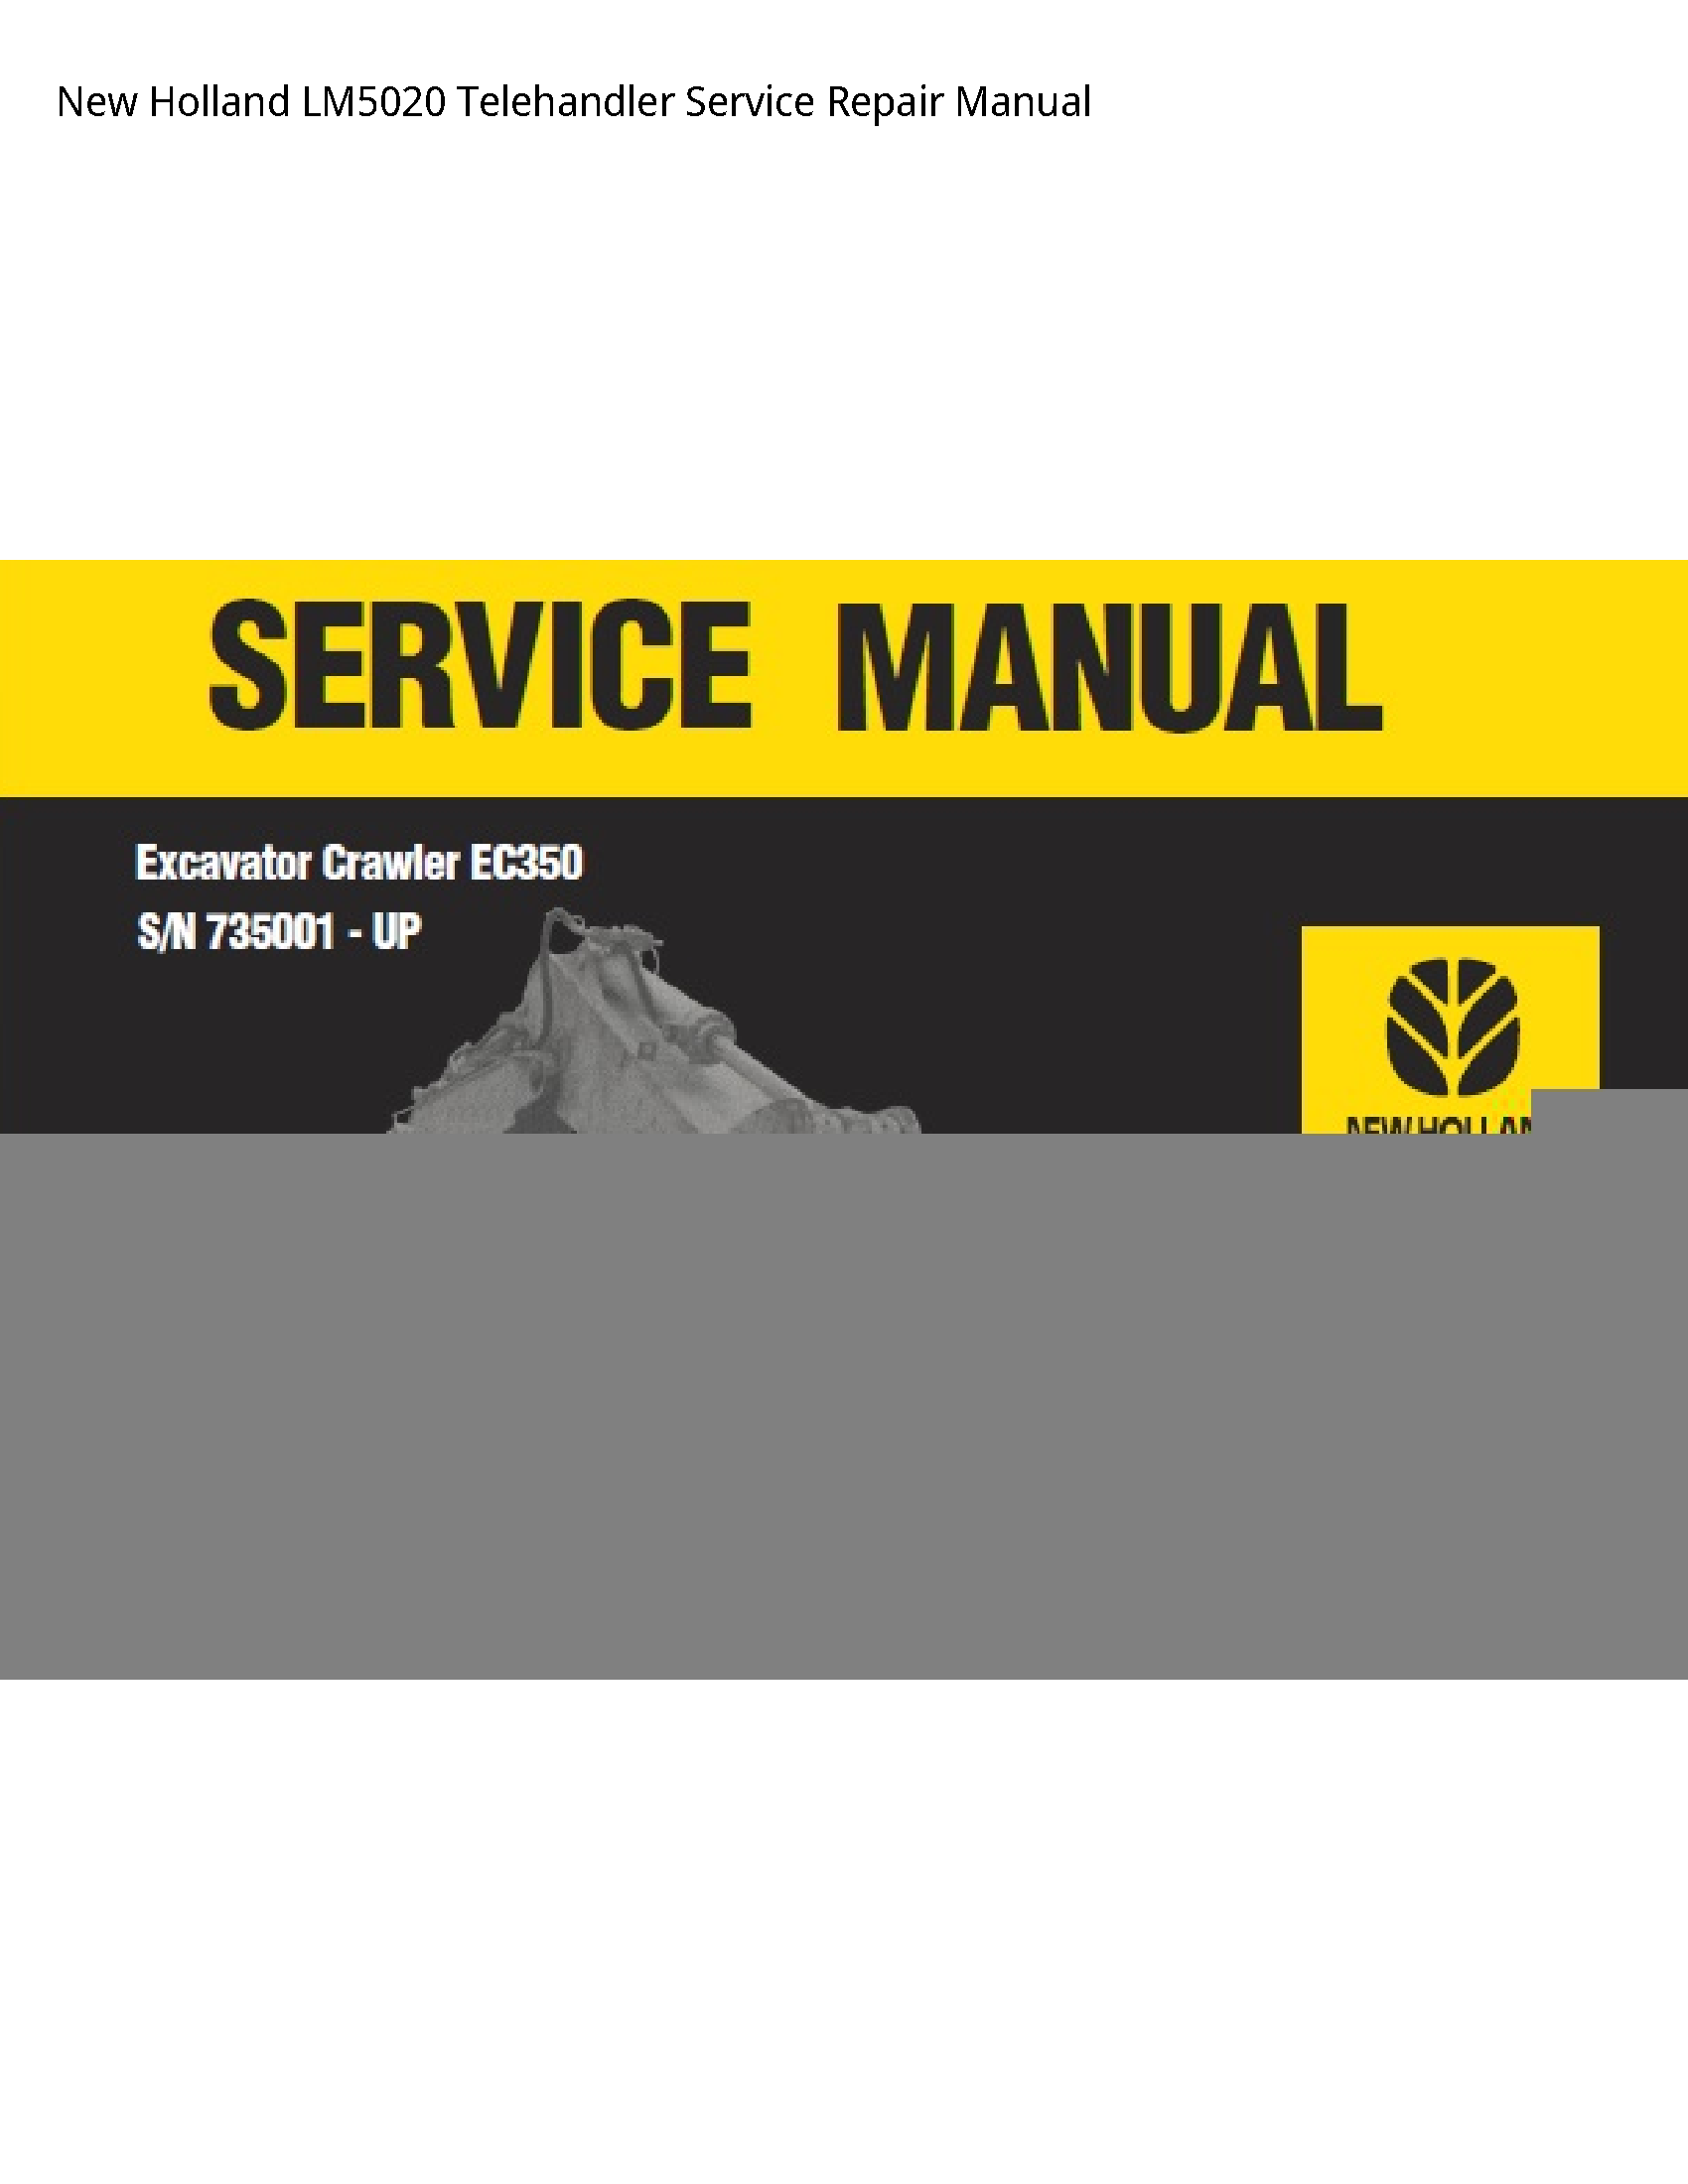 New Holland LM5020 Telehandler manual